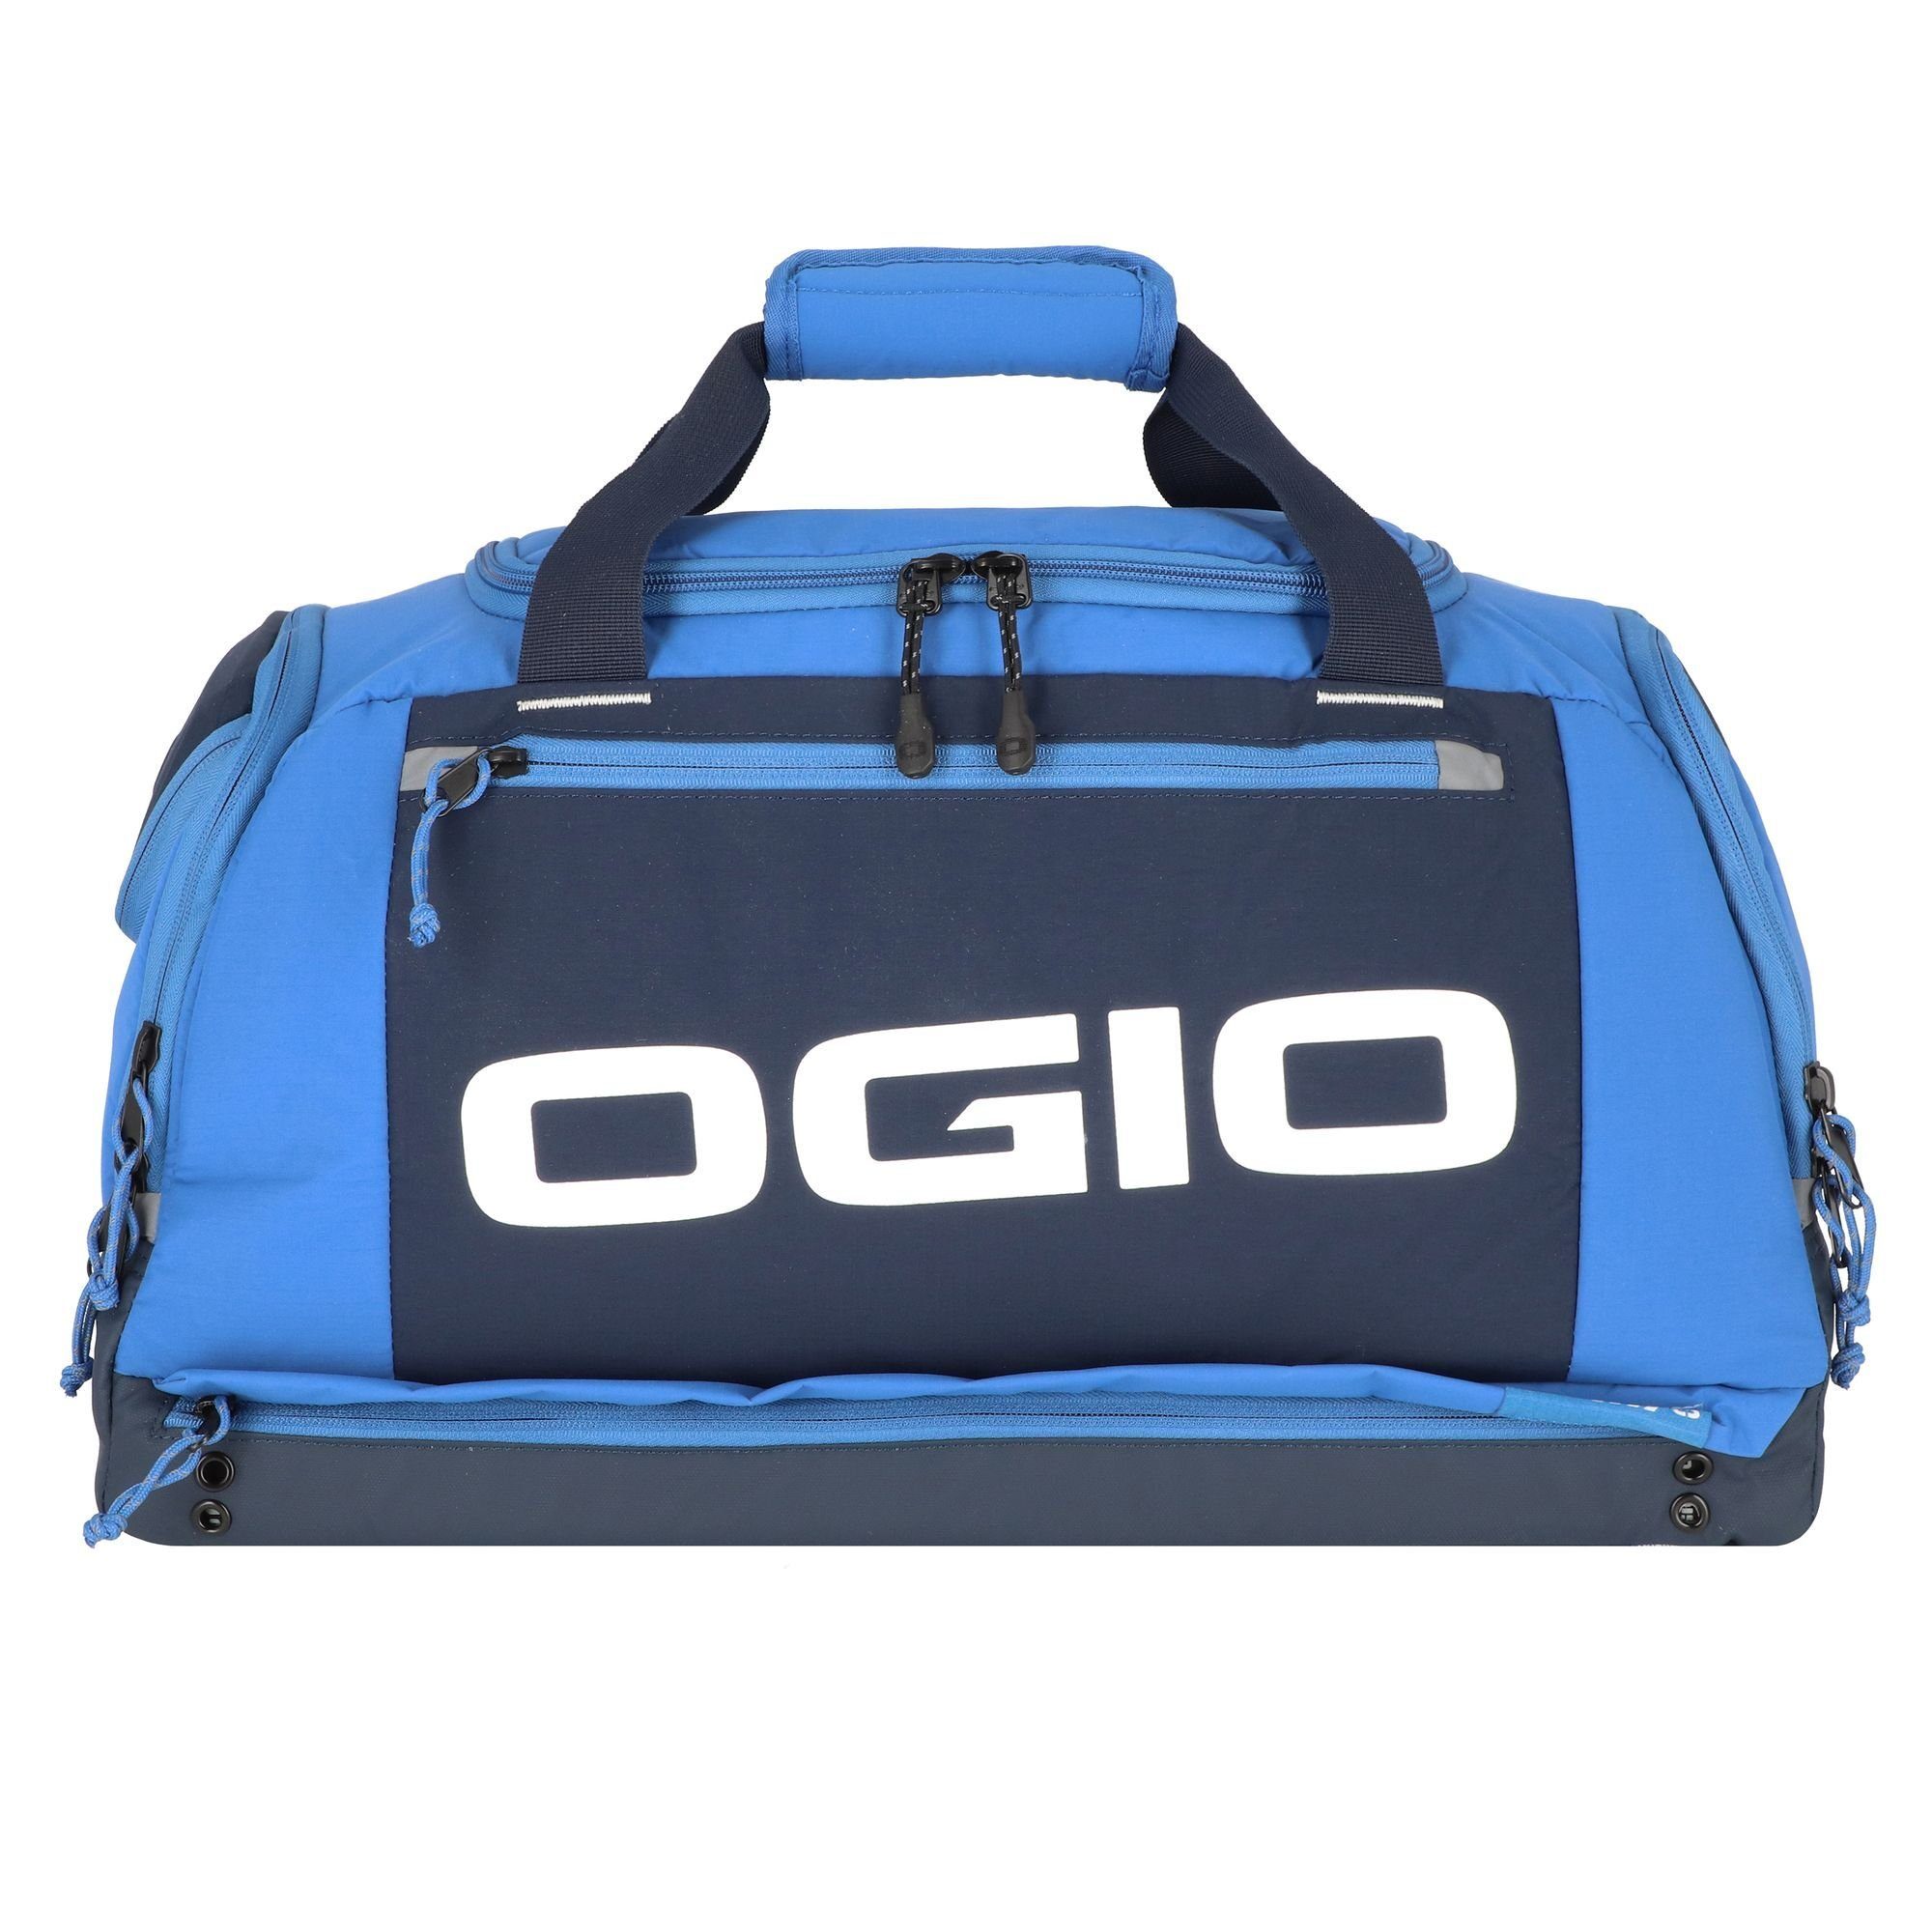 OGIO cobalt Firness, Polyester Sporttasche